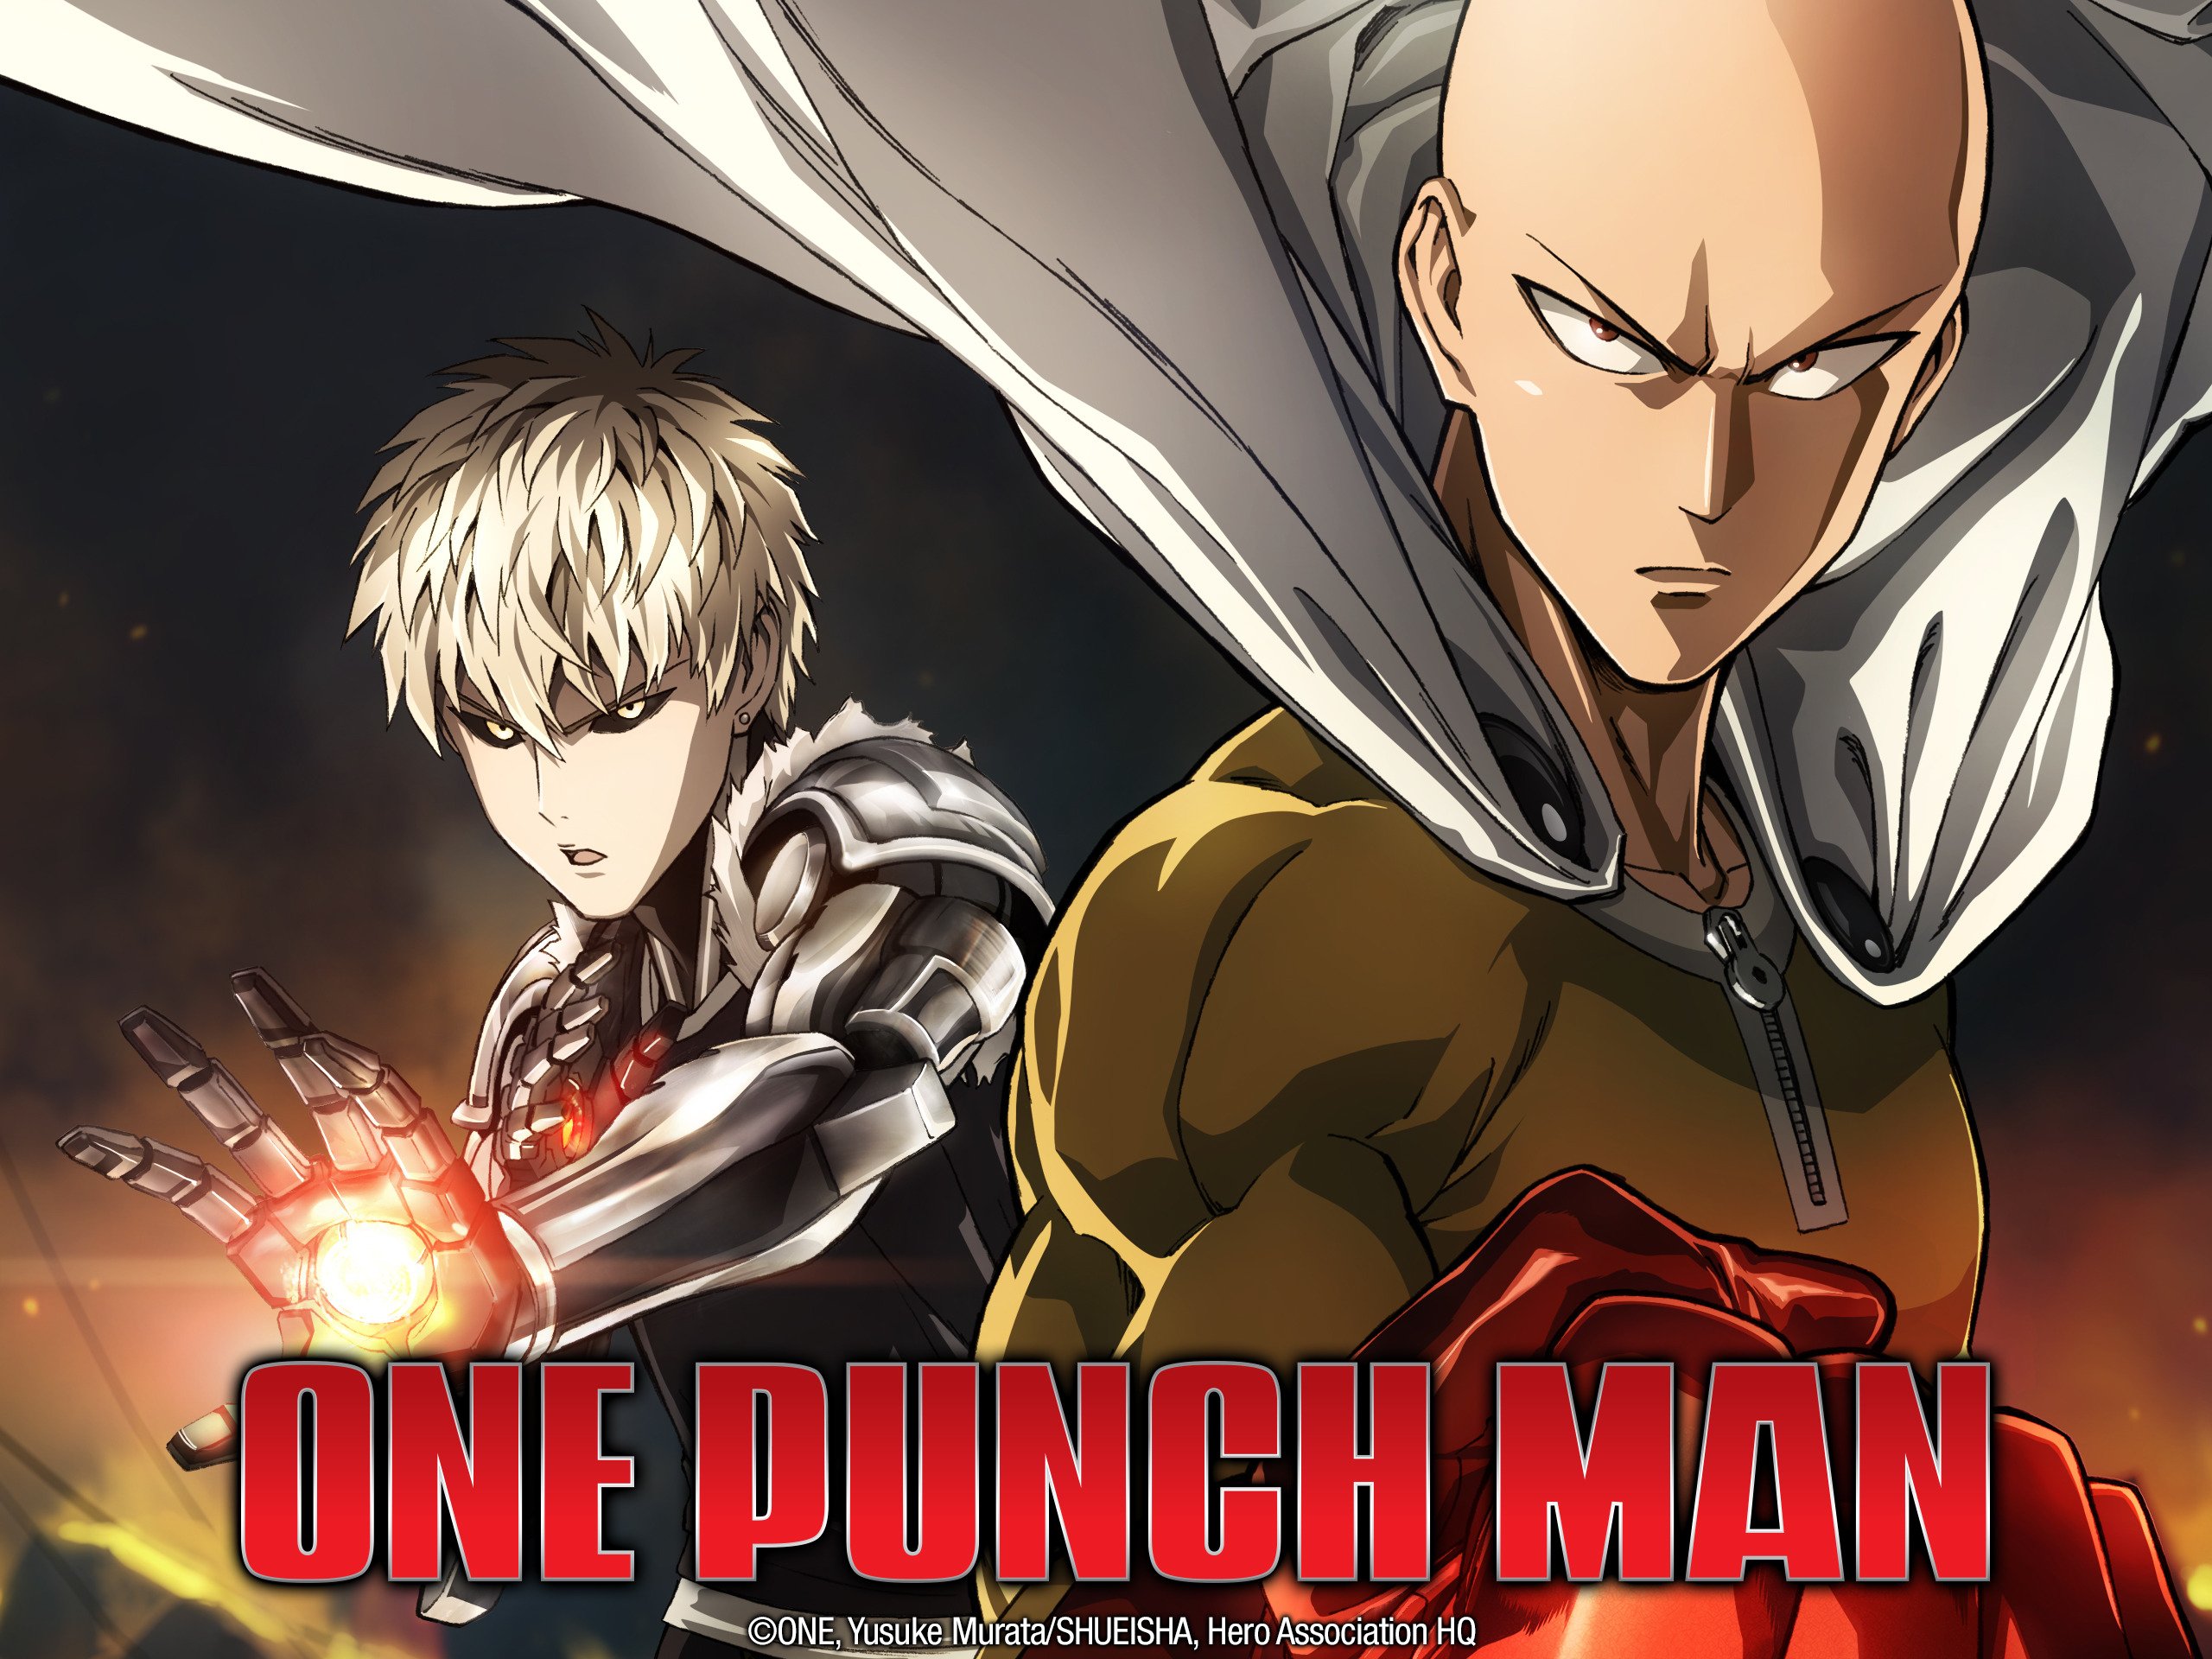 One Punch Man Episode 1 English Dub